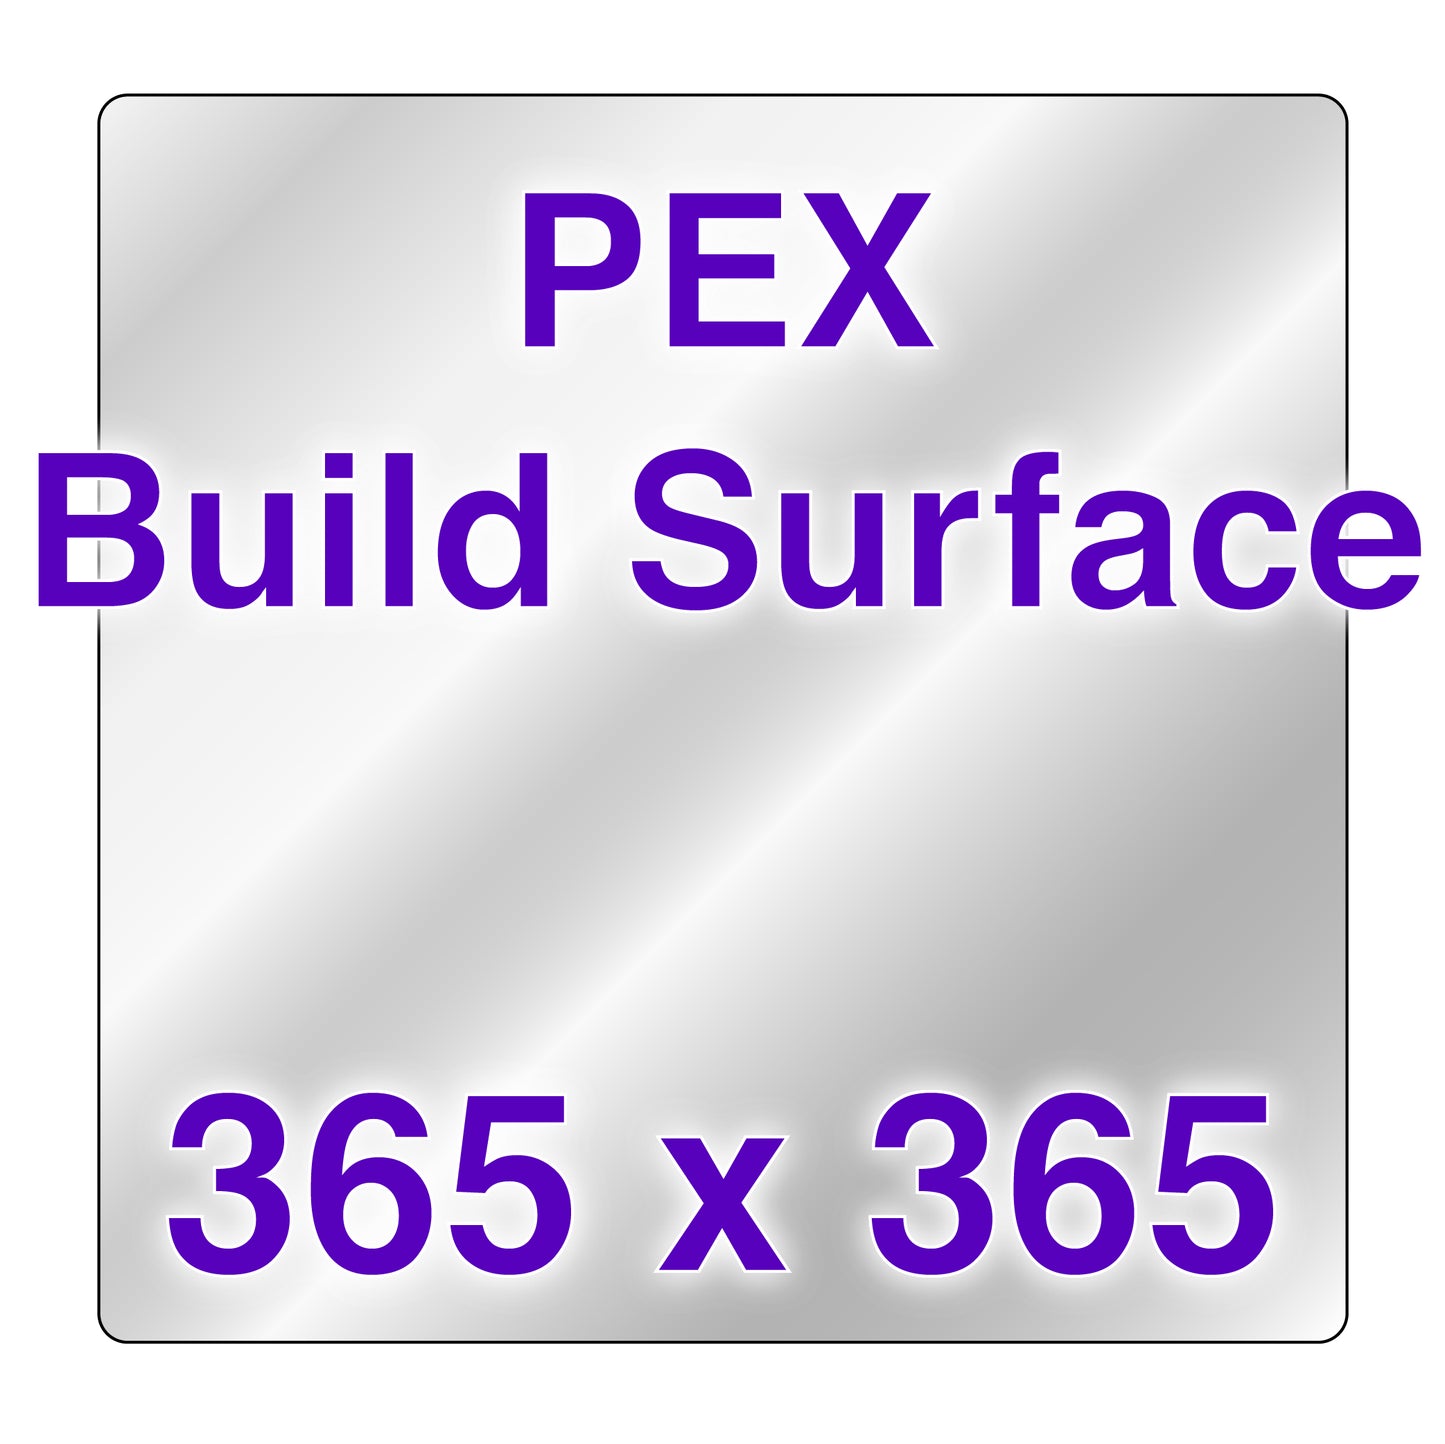 PEX Build Surface - 365 x 365